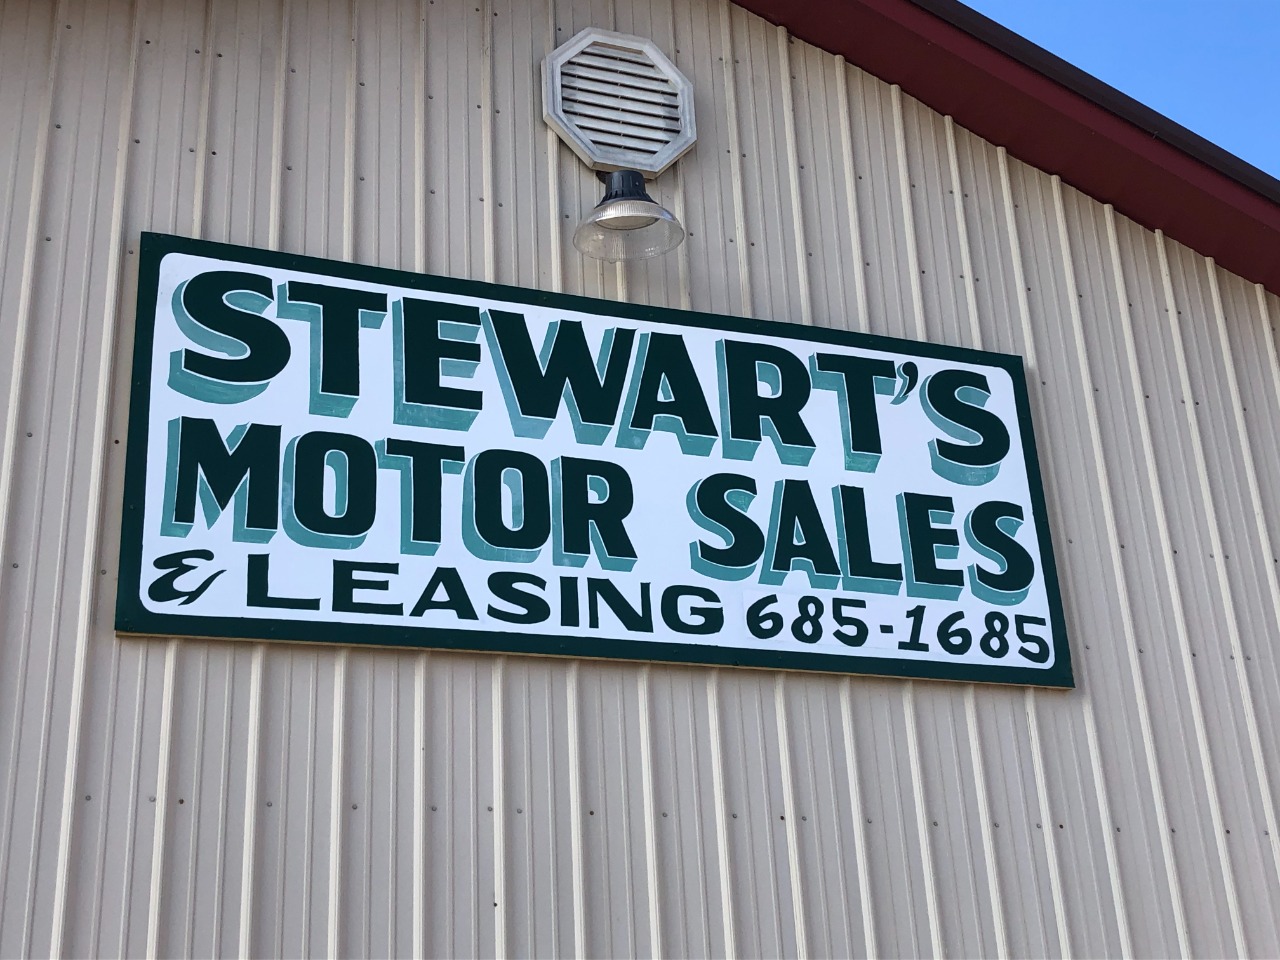 Stewart's Motor Sales